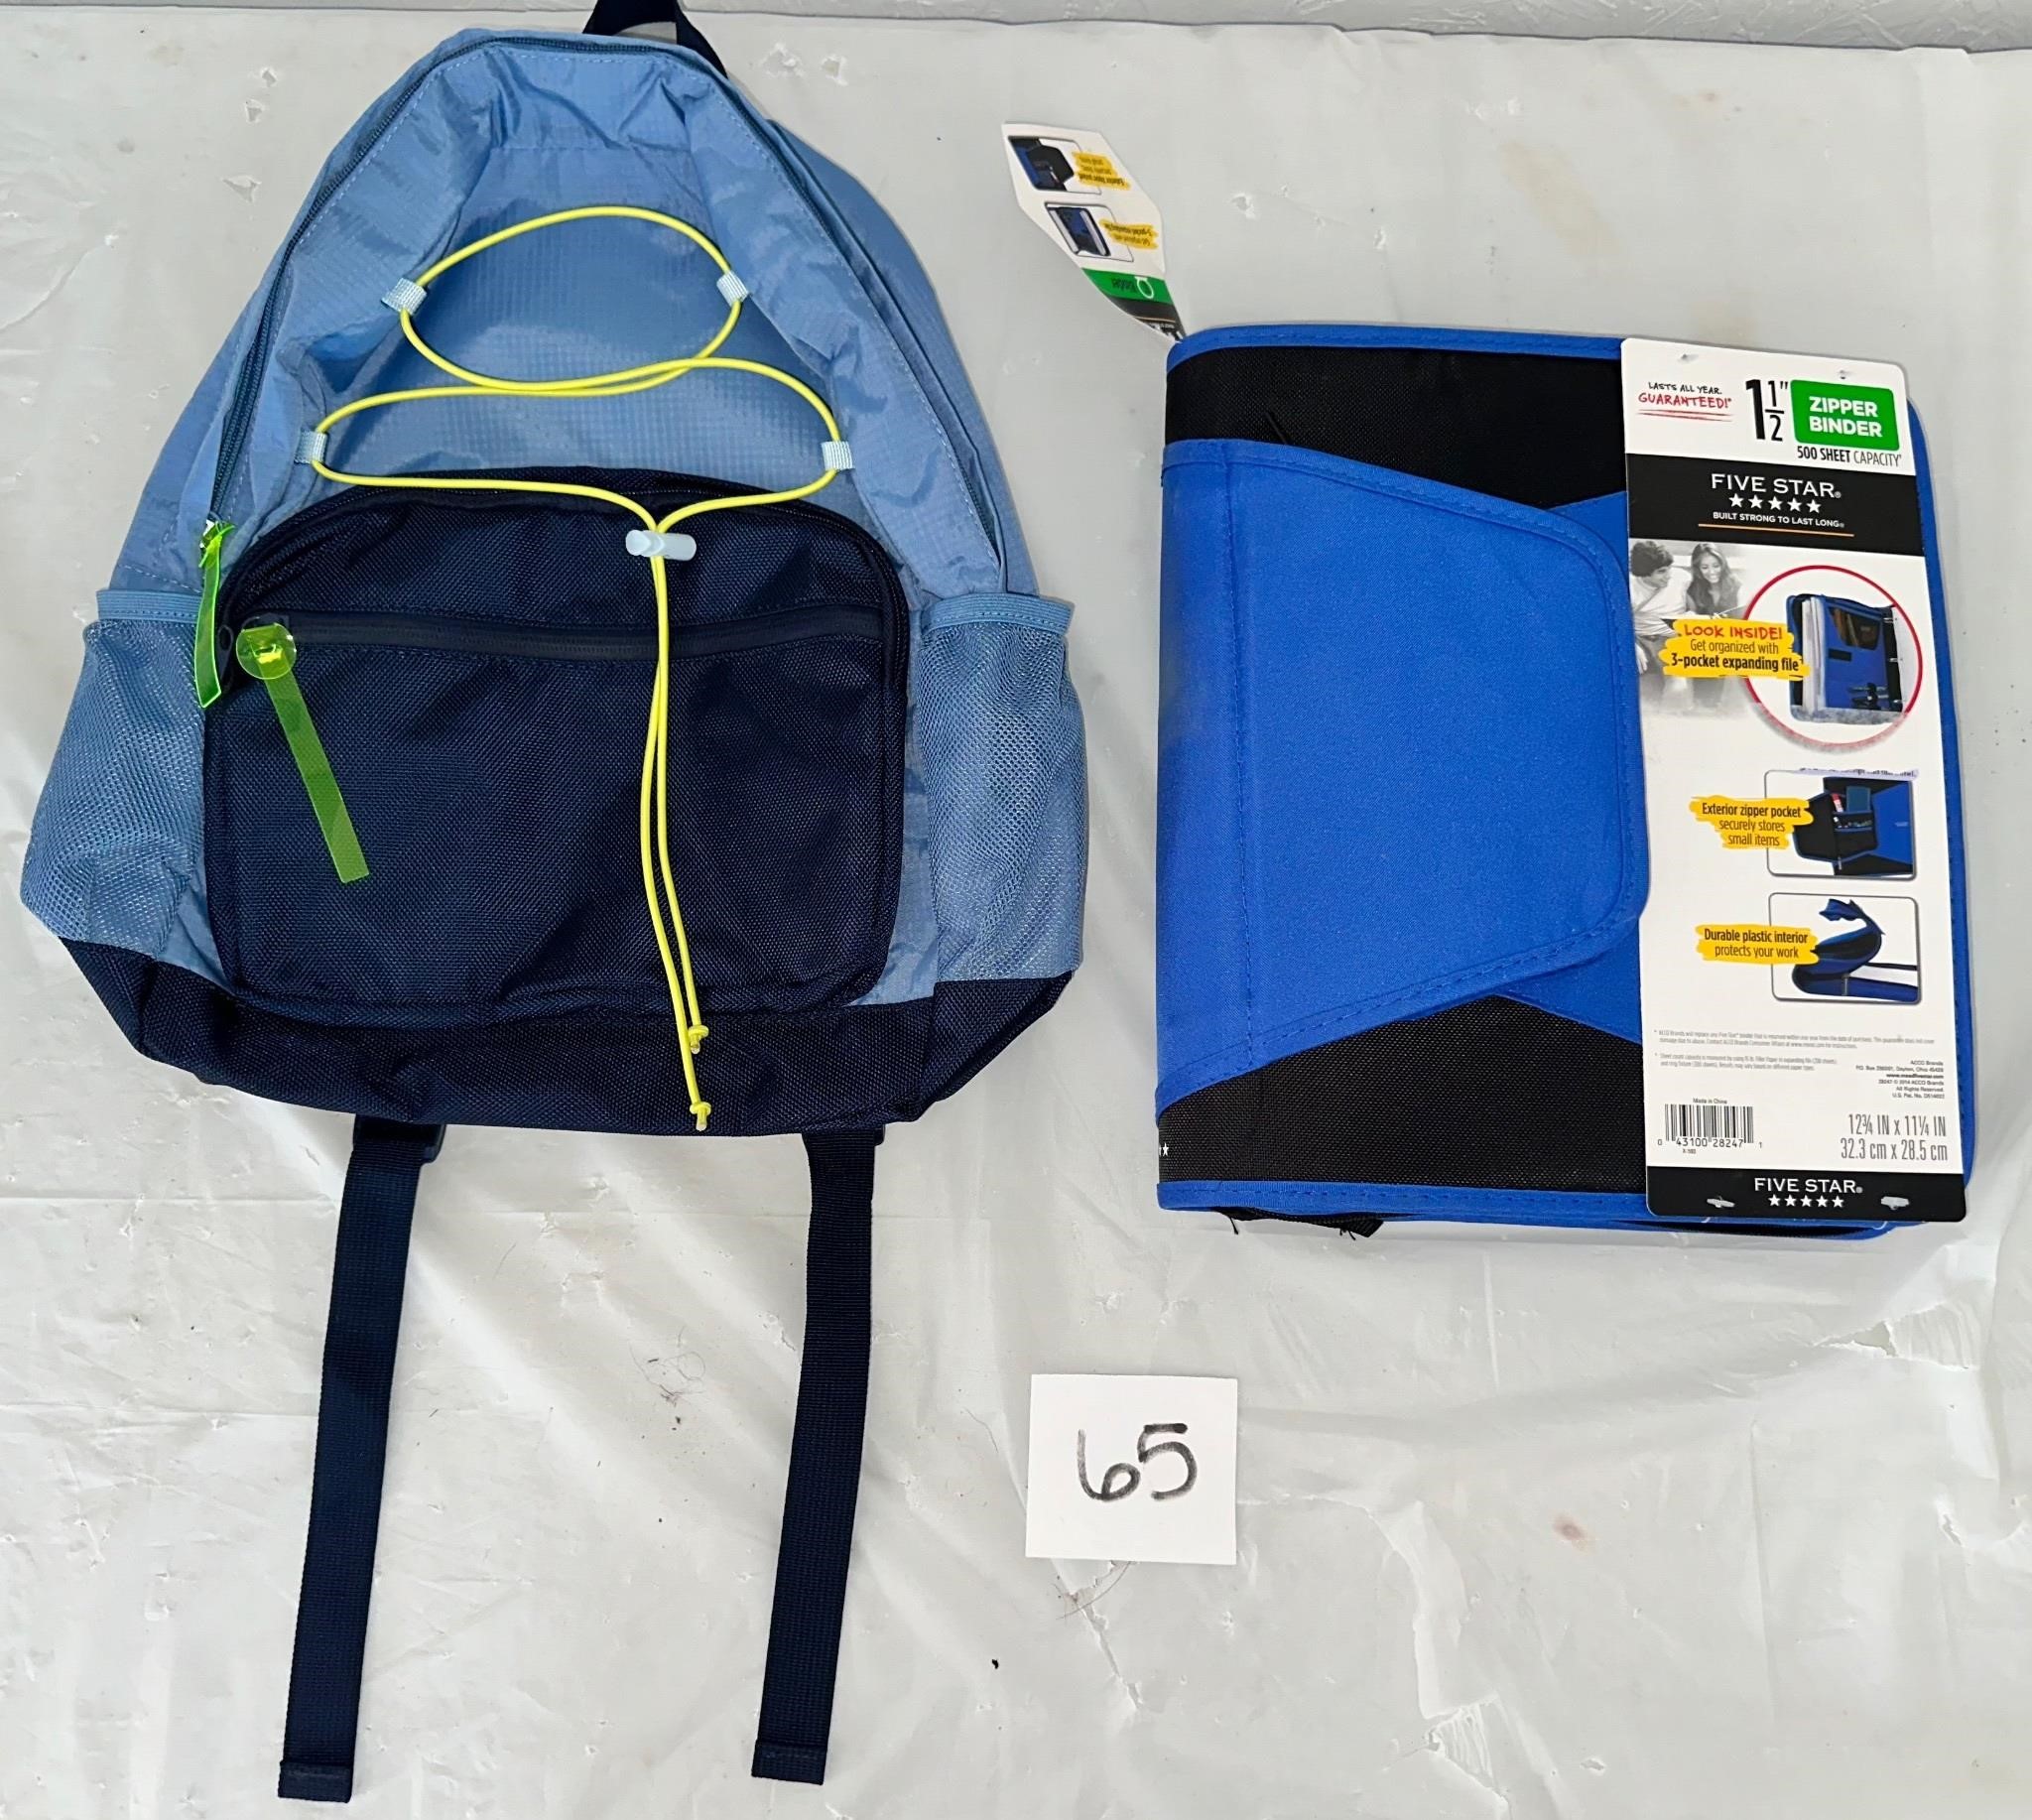 Backpack & Five Star 1 1/2” Zipper Binder